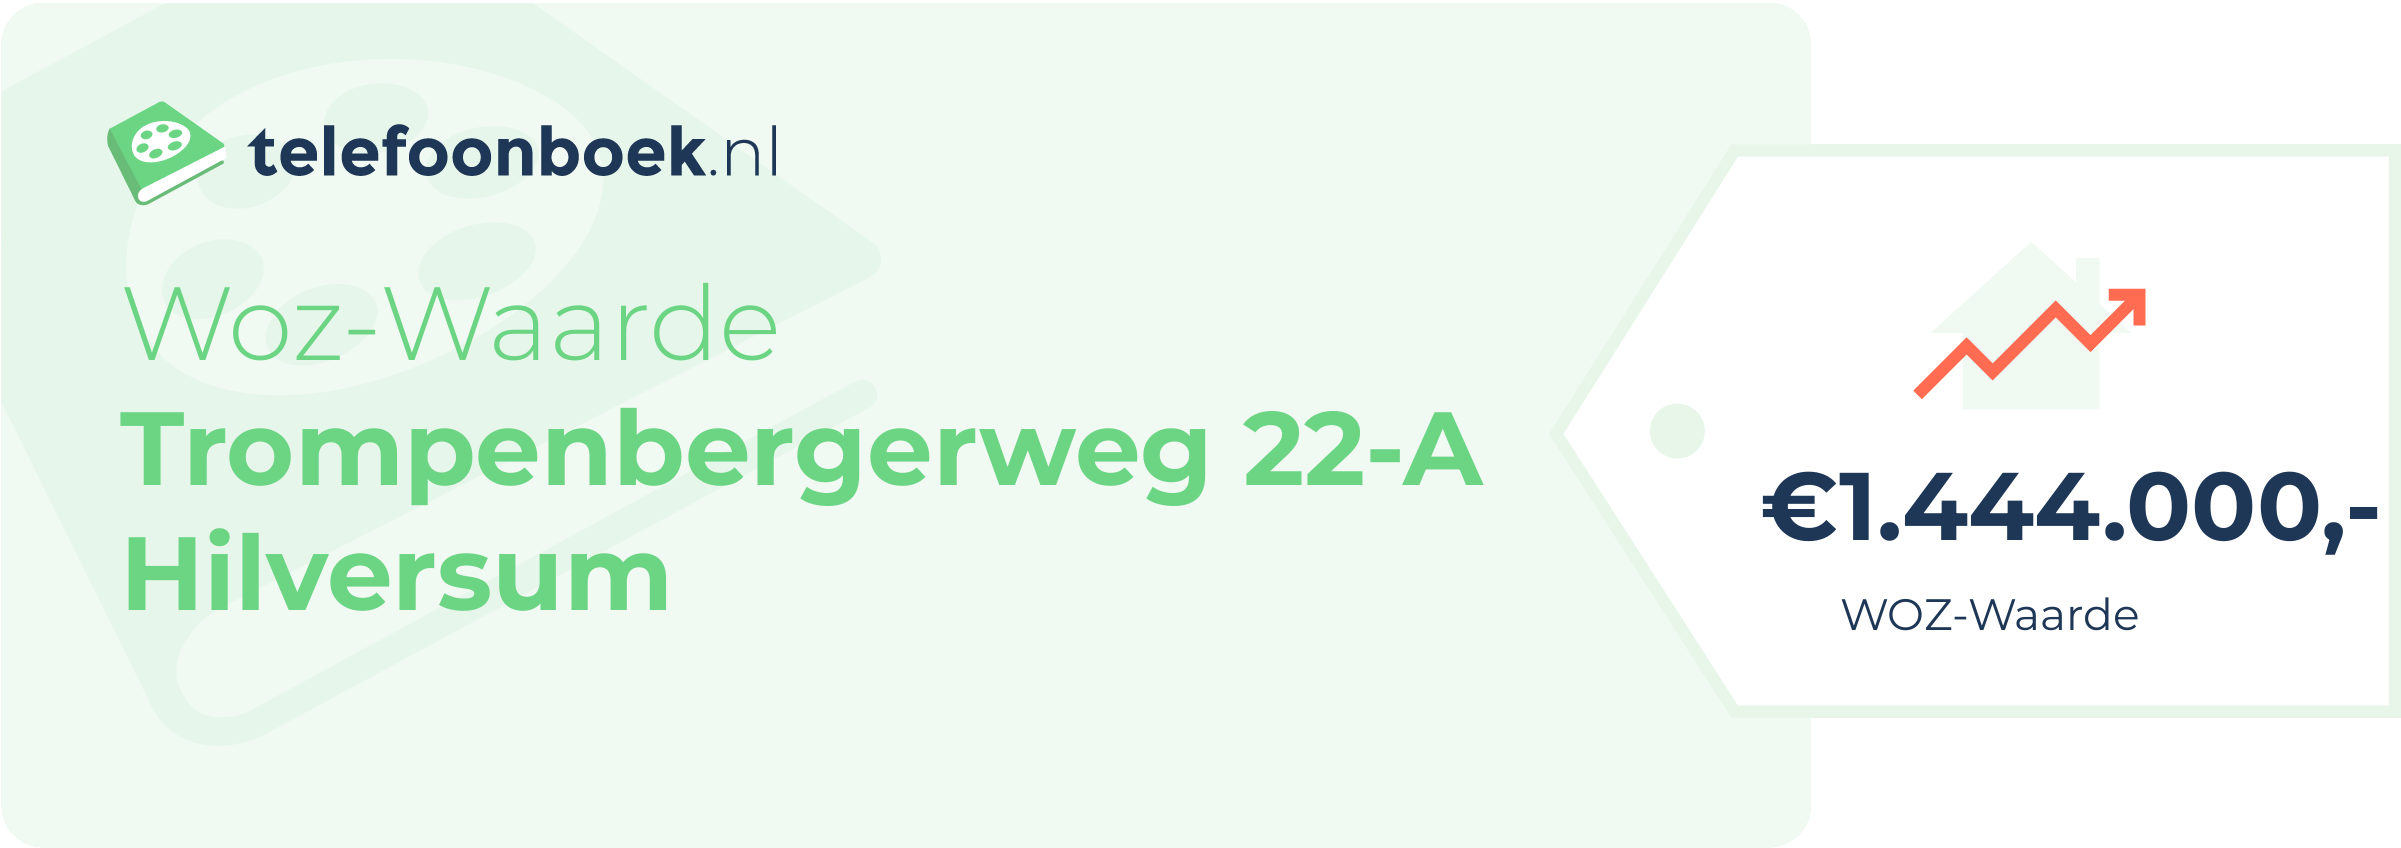 WOZ-waarde Trompenbergerweg 22-A Hilversum